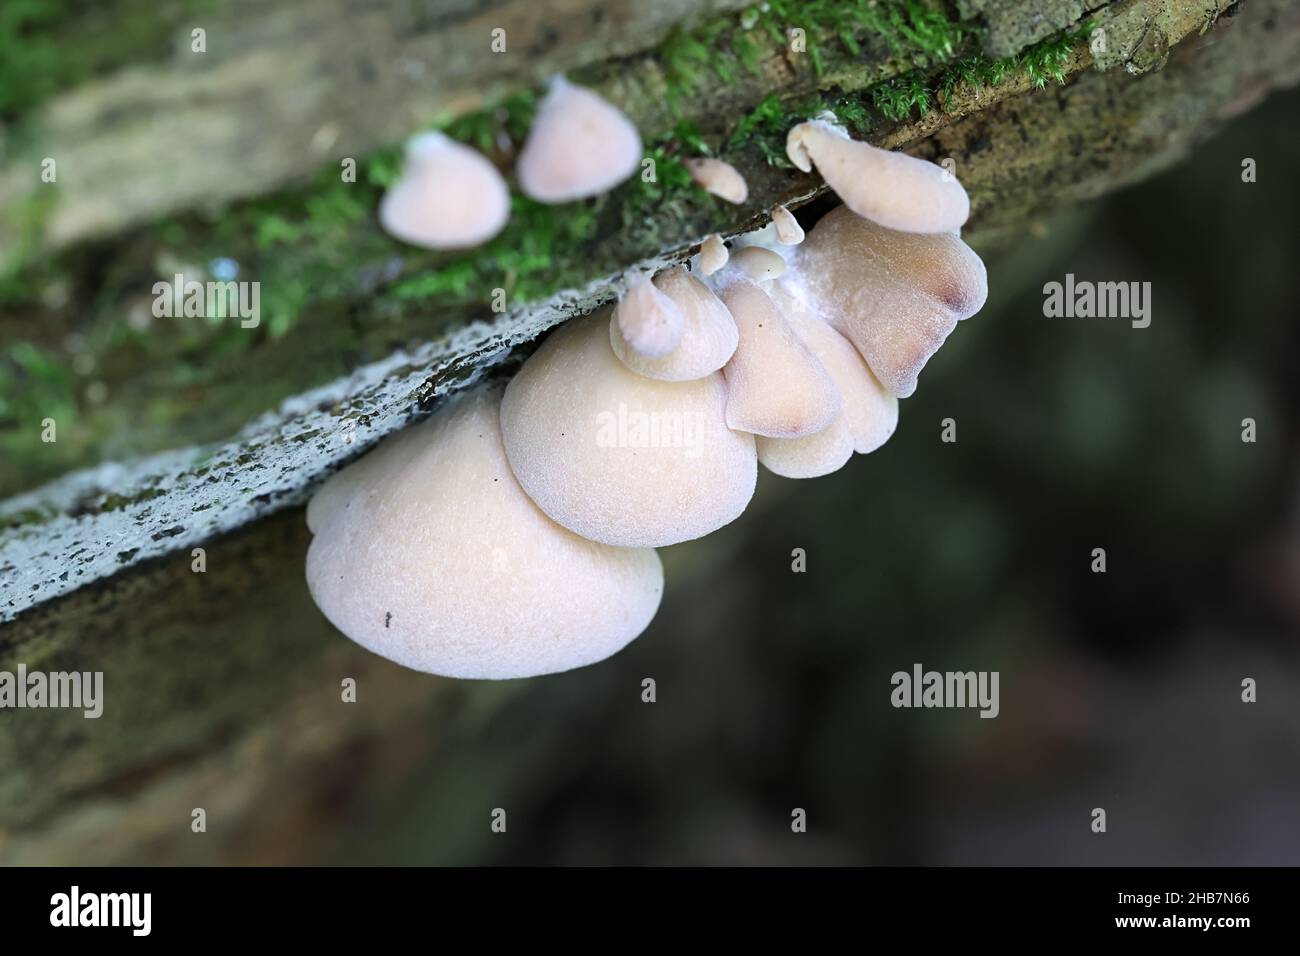 Lentinellus ursinus, commonly called the Bear Lentinus, wild mushroom from Finland Stock Photo